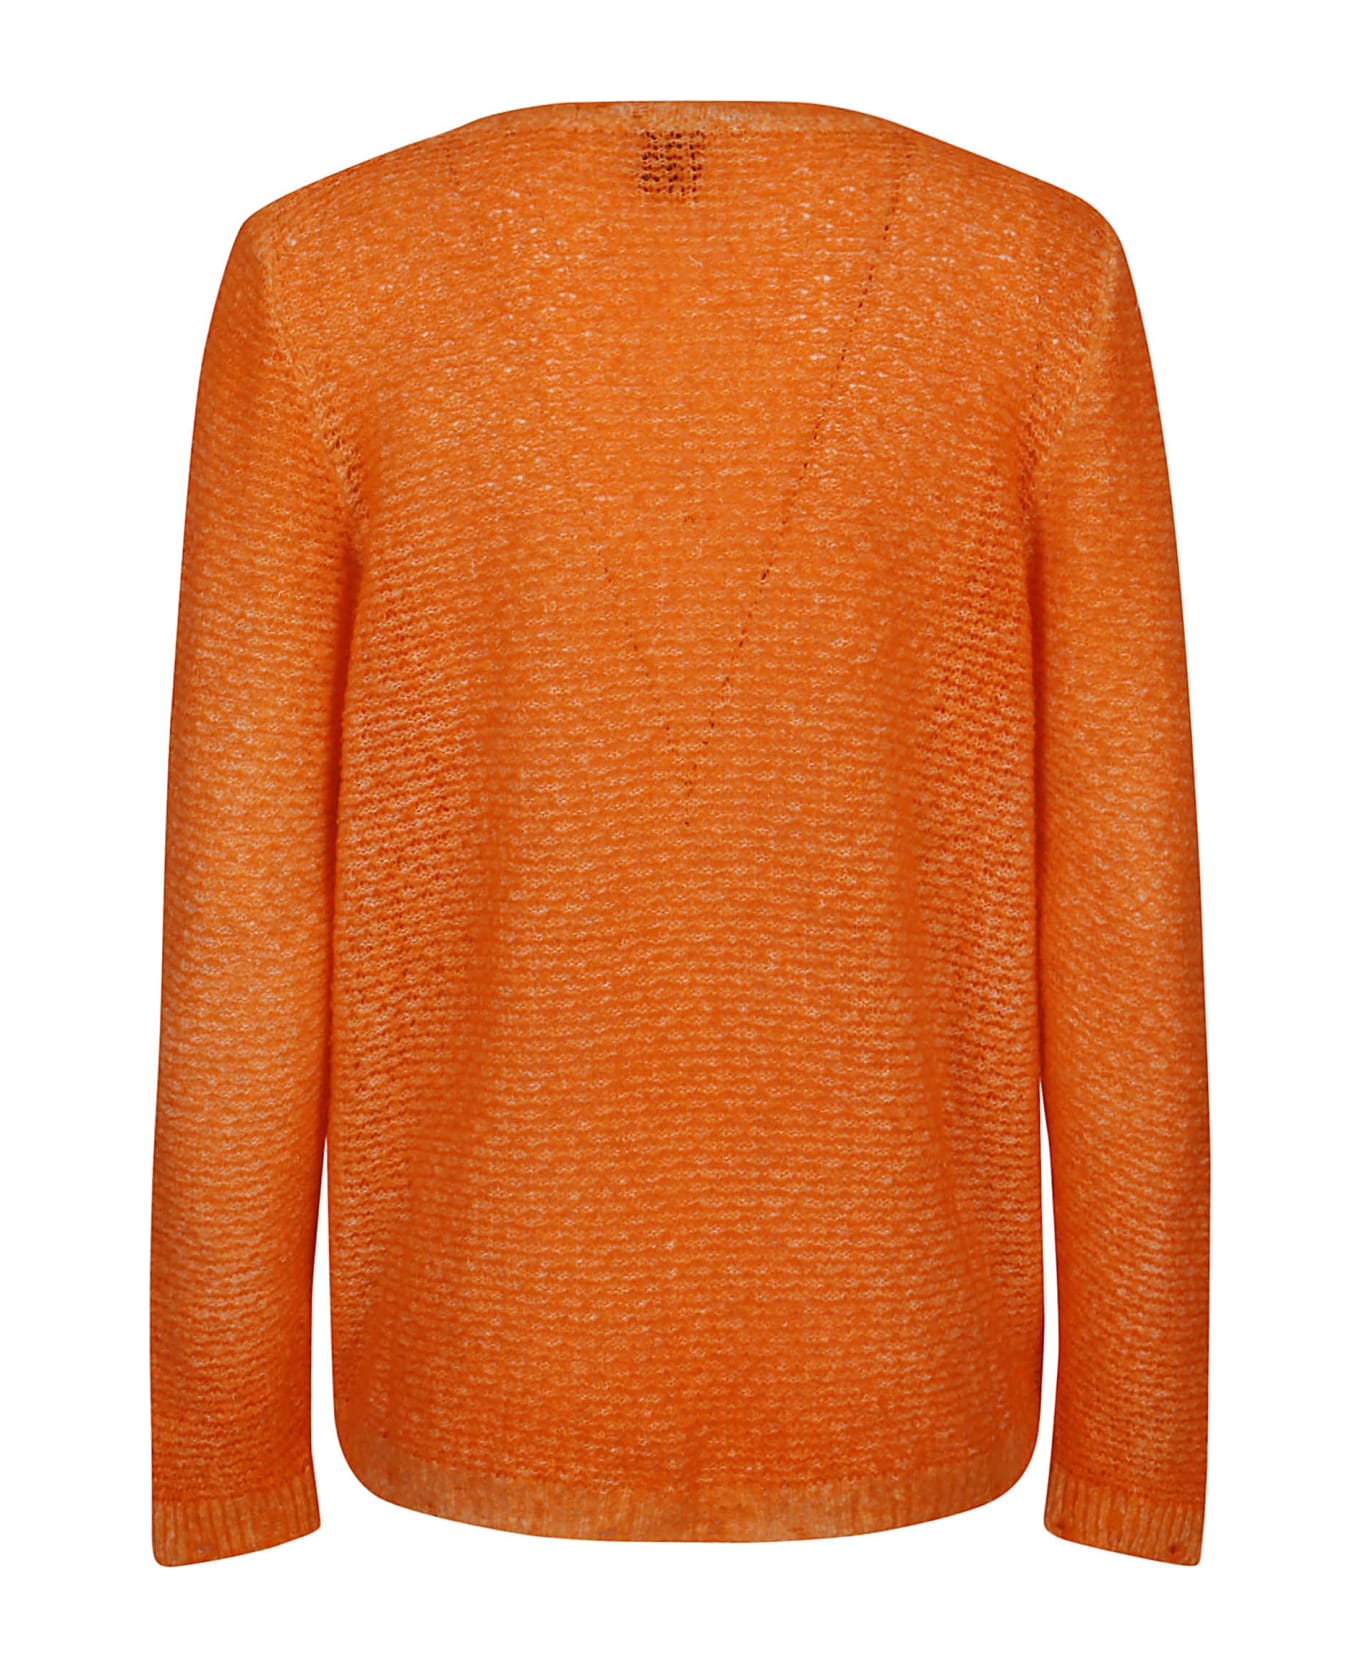 Avant Toi Sweaters Orange - Orange ニットウェア